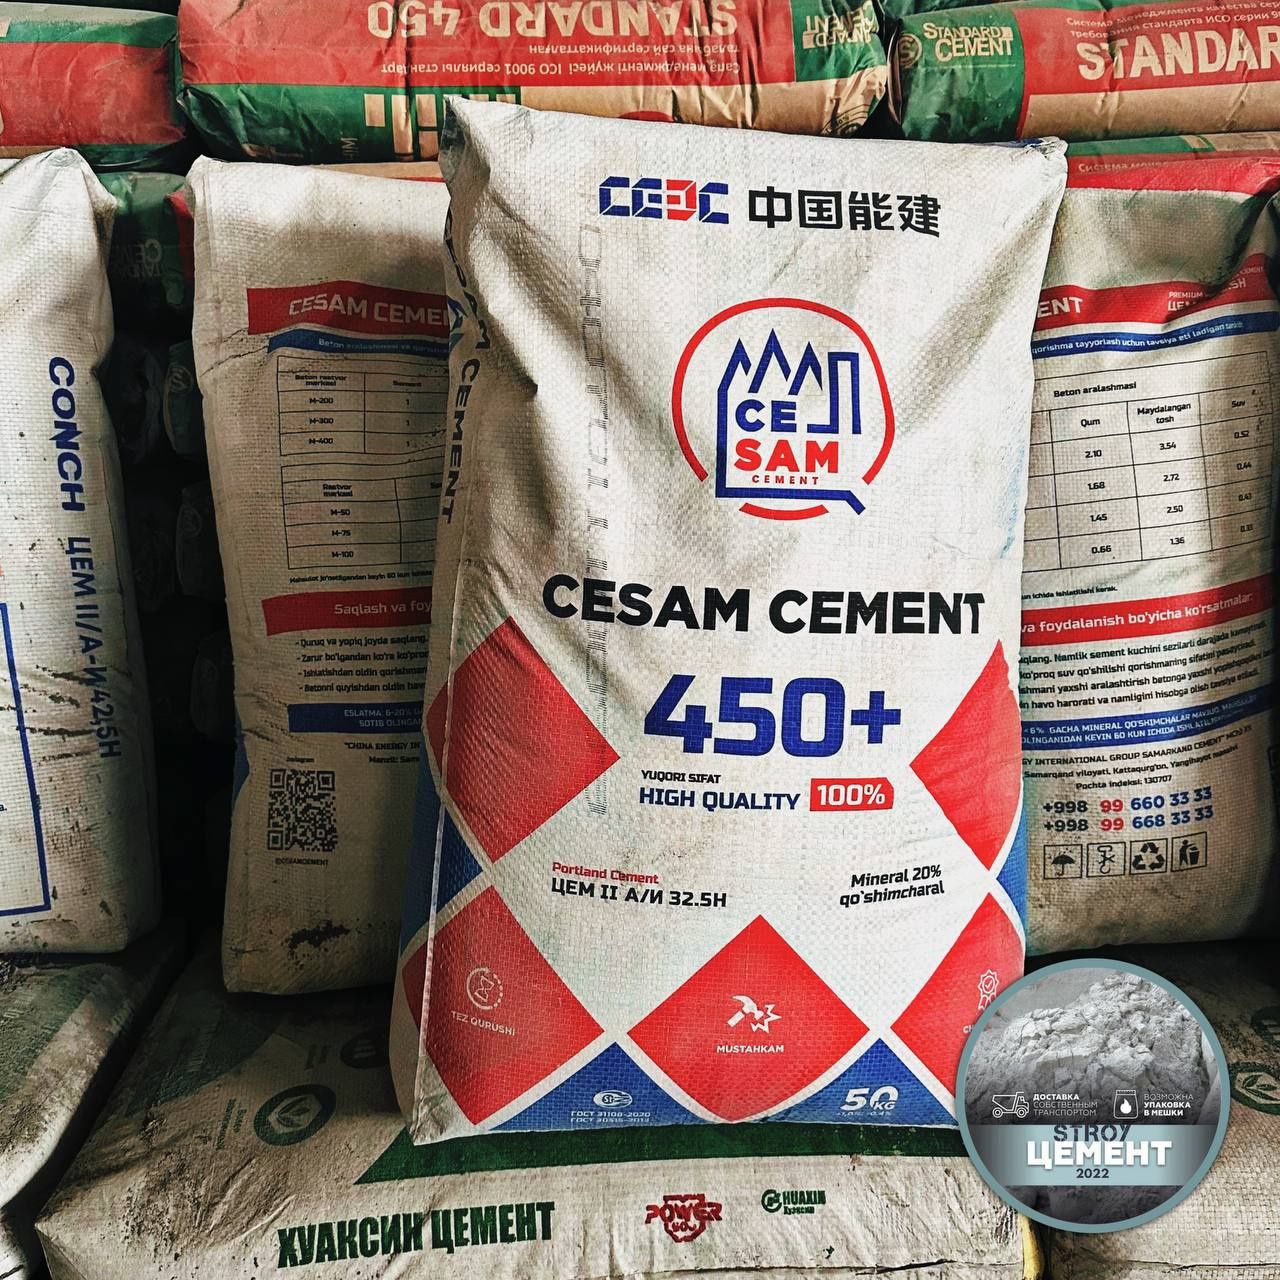 Cesam cement Sezam sement